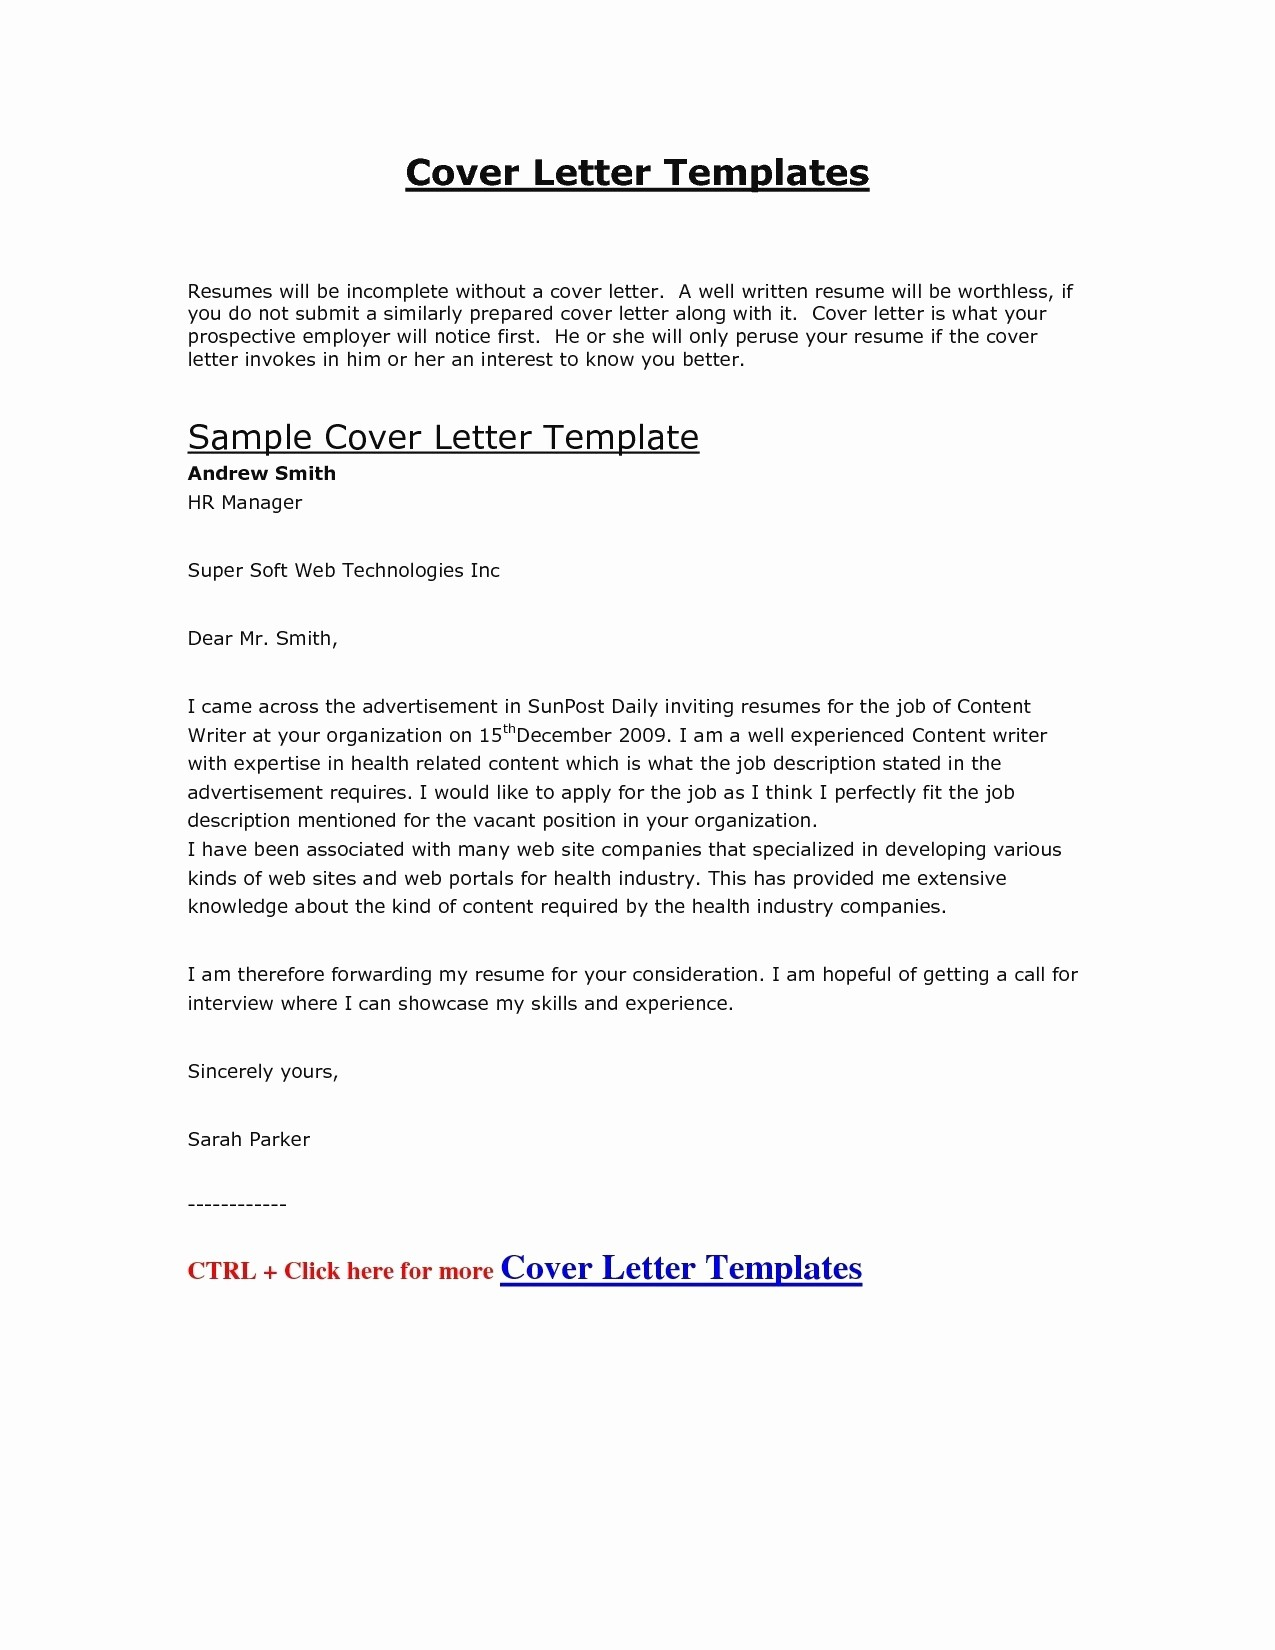 Excellent Cover Letter Template - Job Application Letter format Template Copy Cover Letter Template Hr